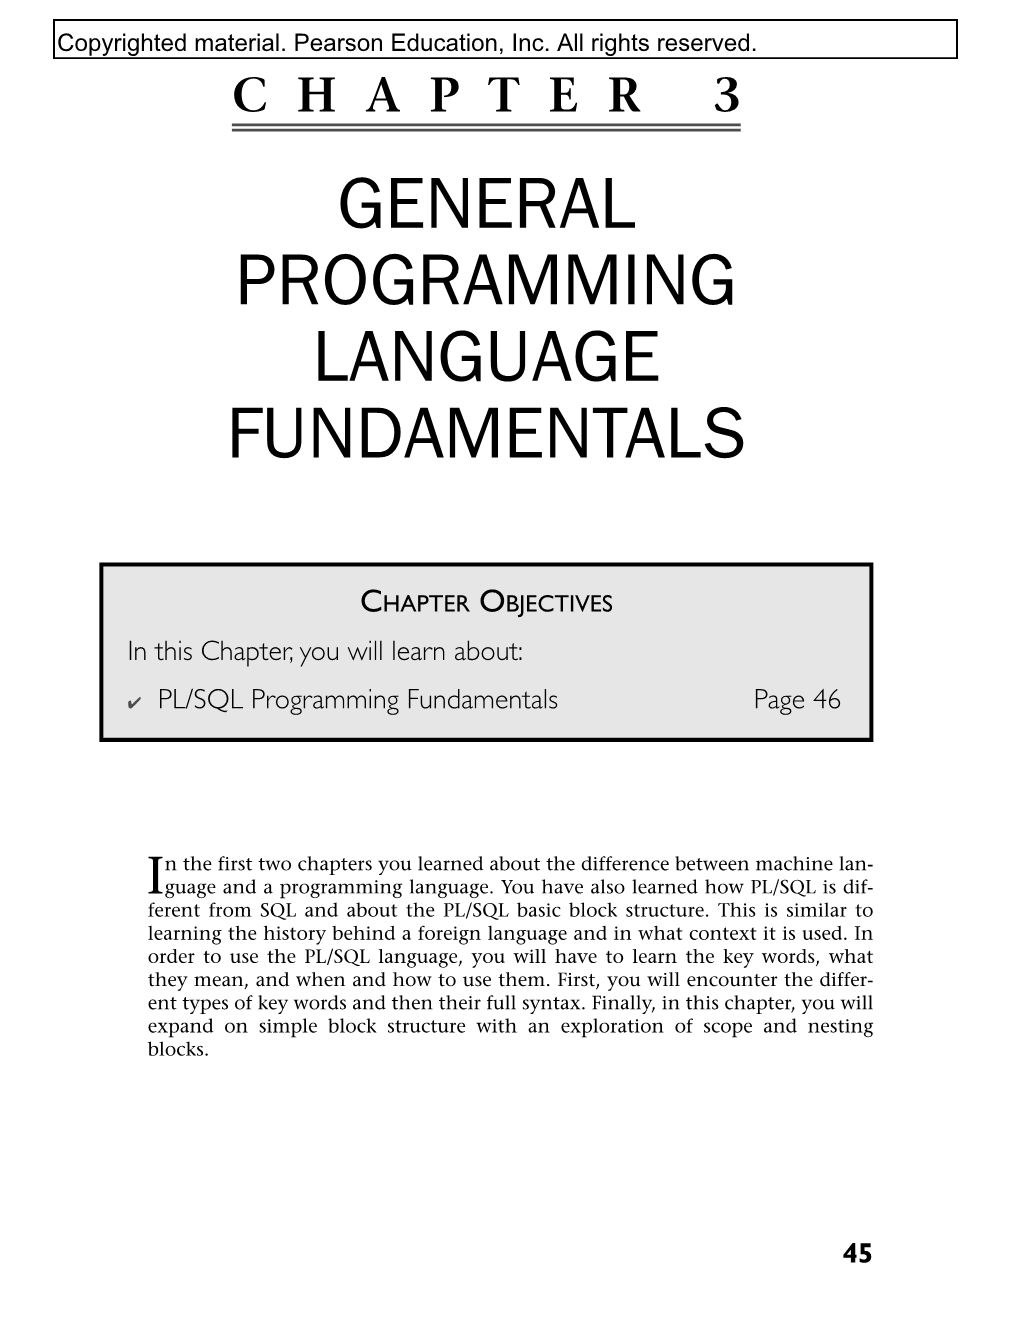 General Programming Language Fundamentals